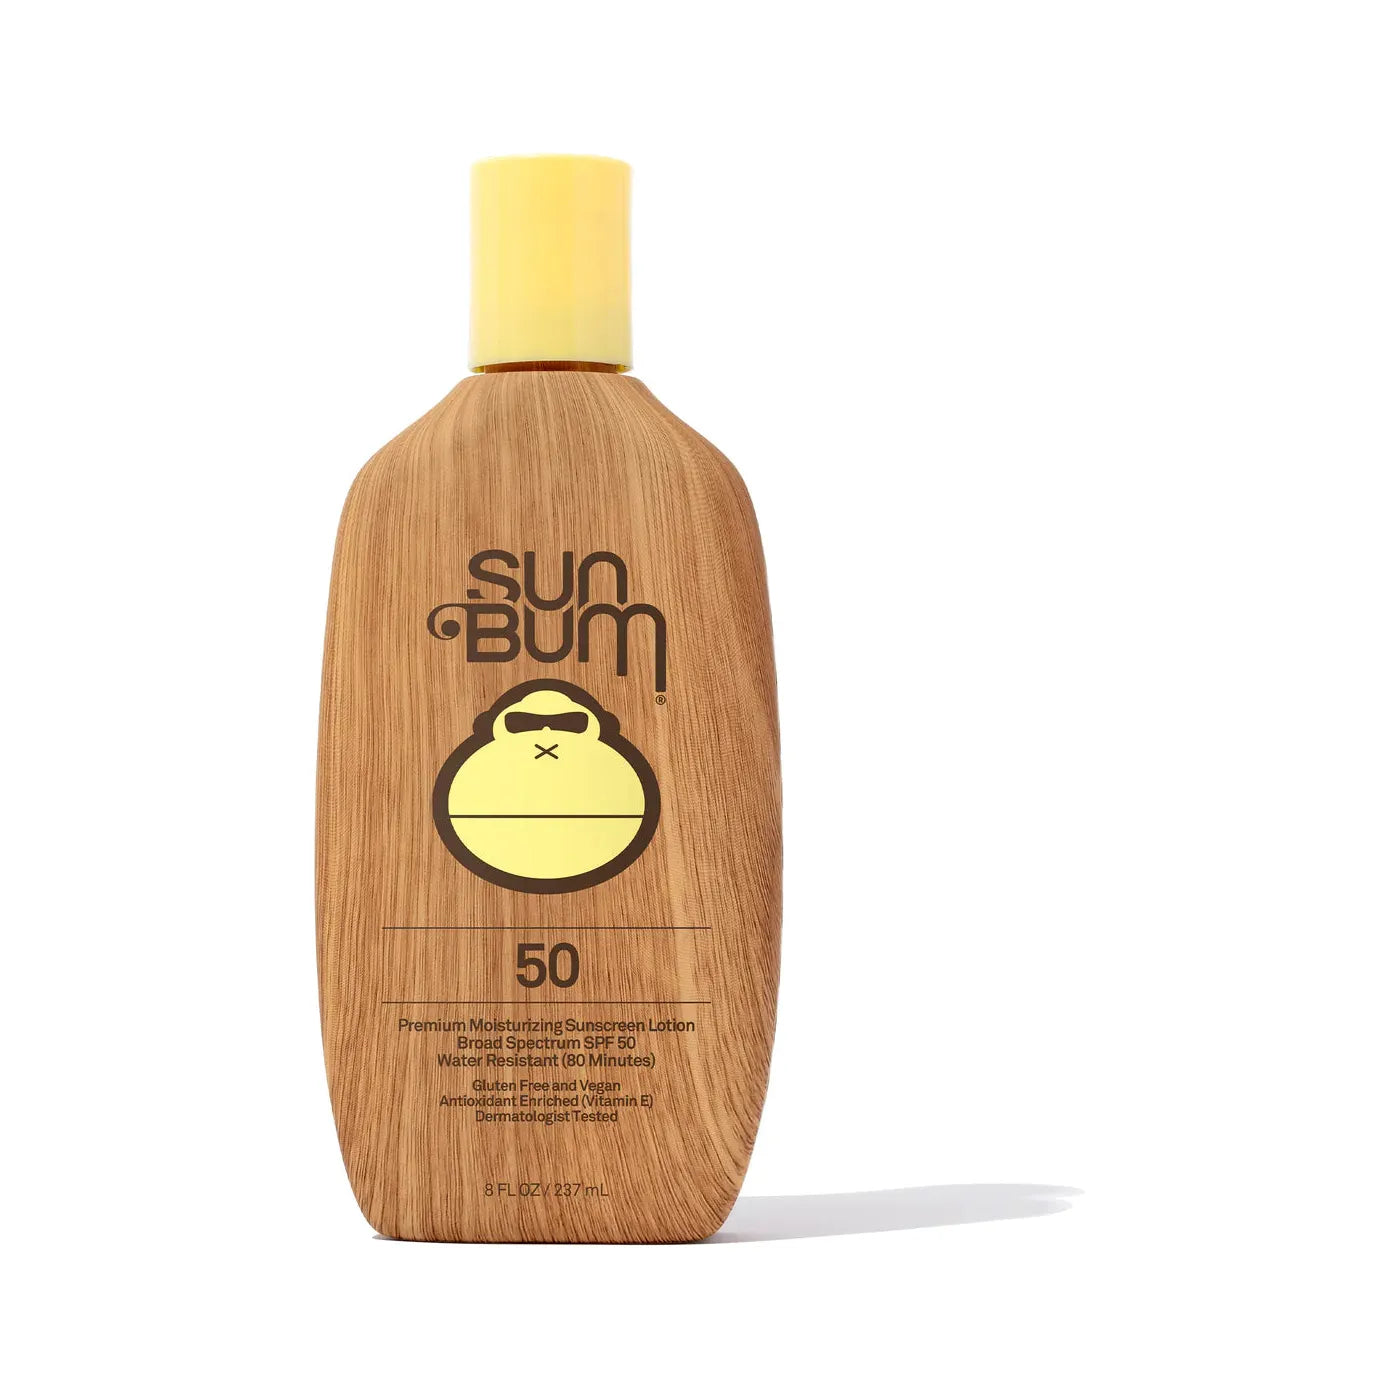 Sun Bum - Original SPF 50 Sunscreen Lotion